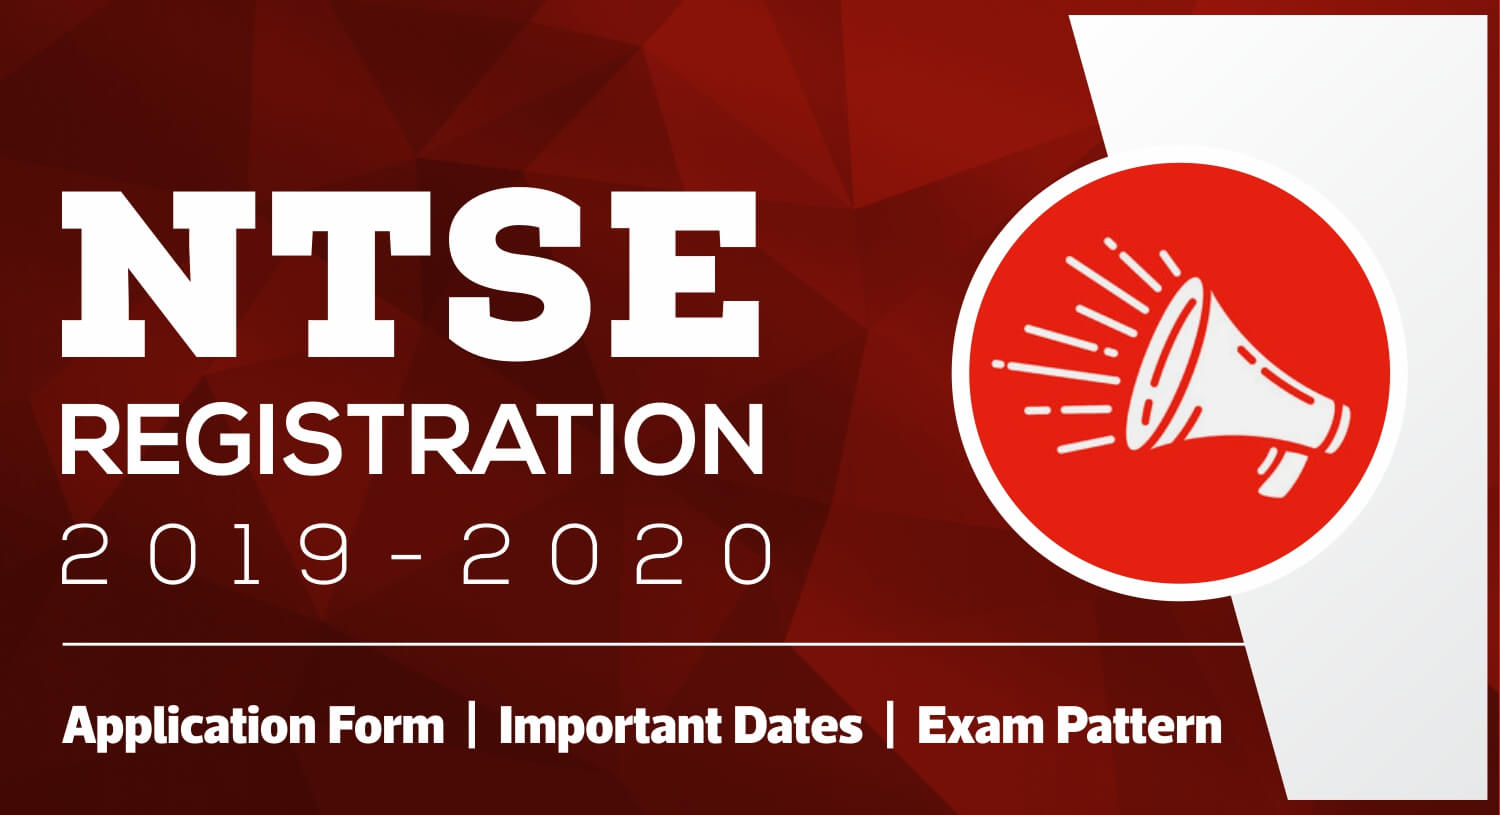 NTSE Registration 2019-2020: Application Form, Important Dates, Exam Pattern